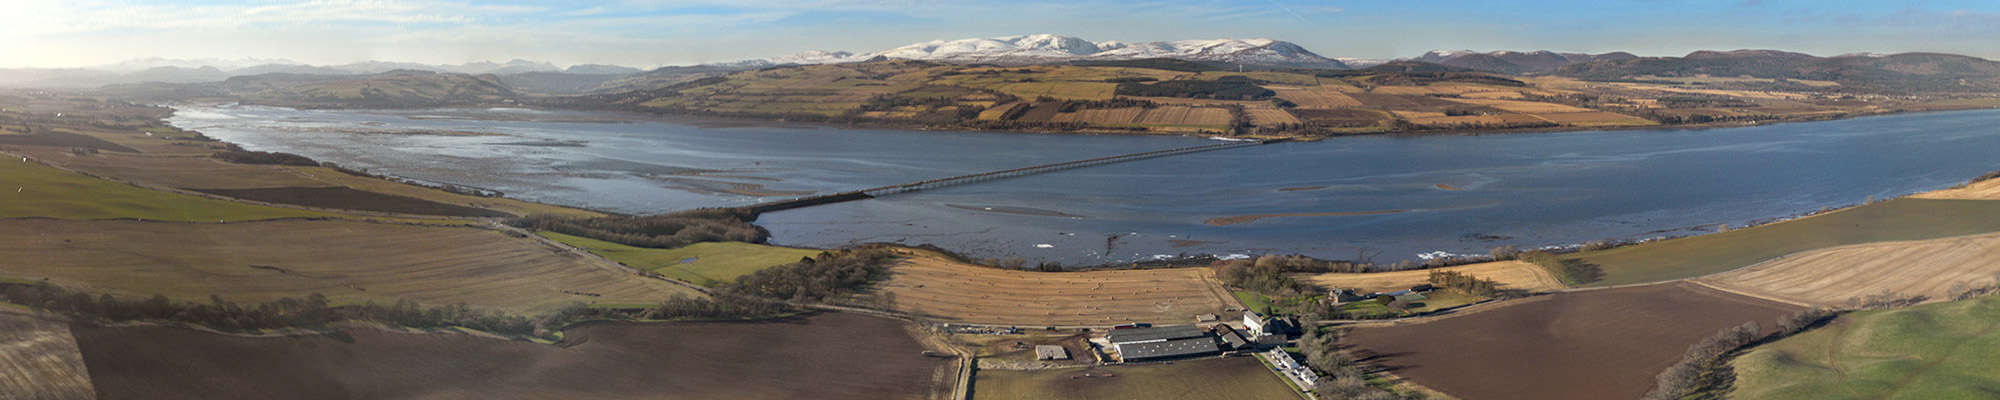 aerial photography, Cromarty Firth, Cromarty Bridge, Black Isle, Ben Wyvis